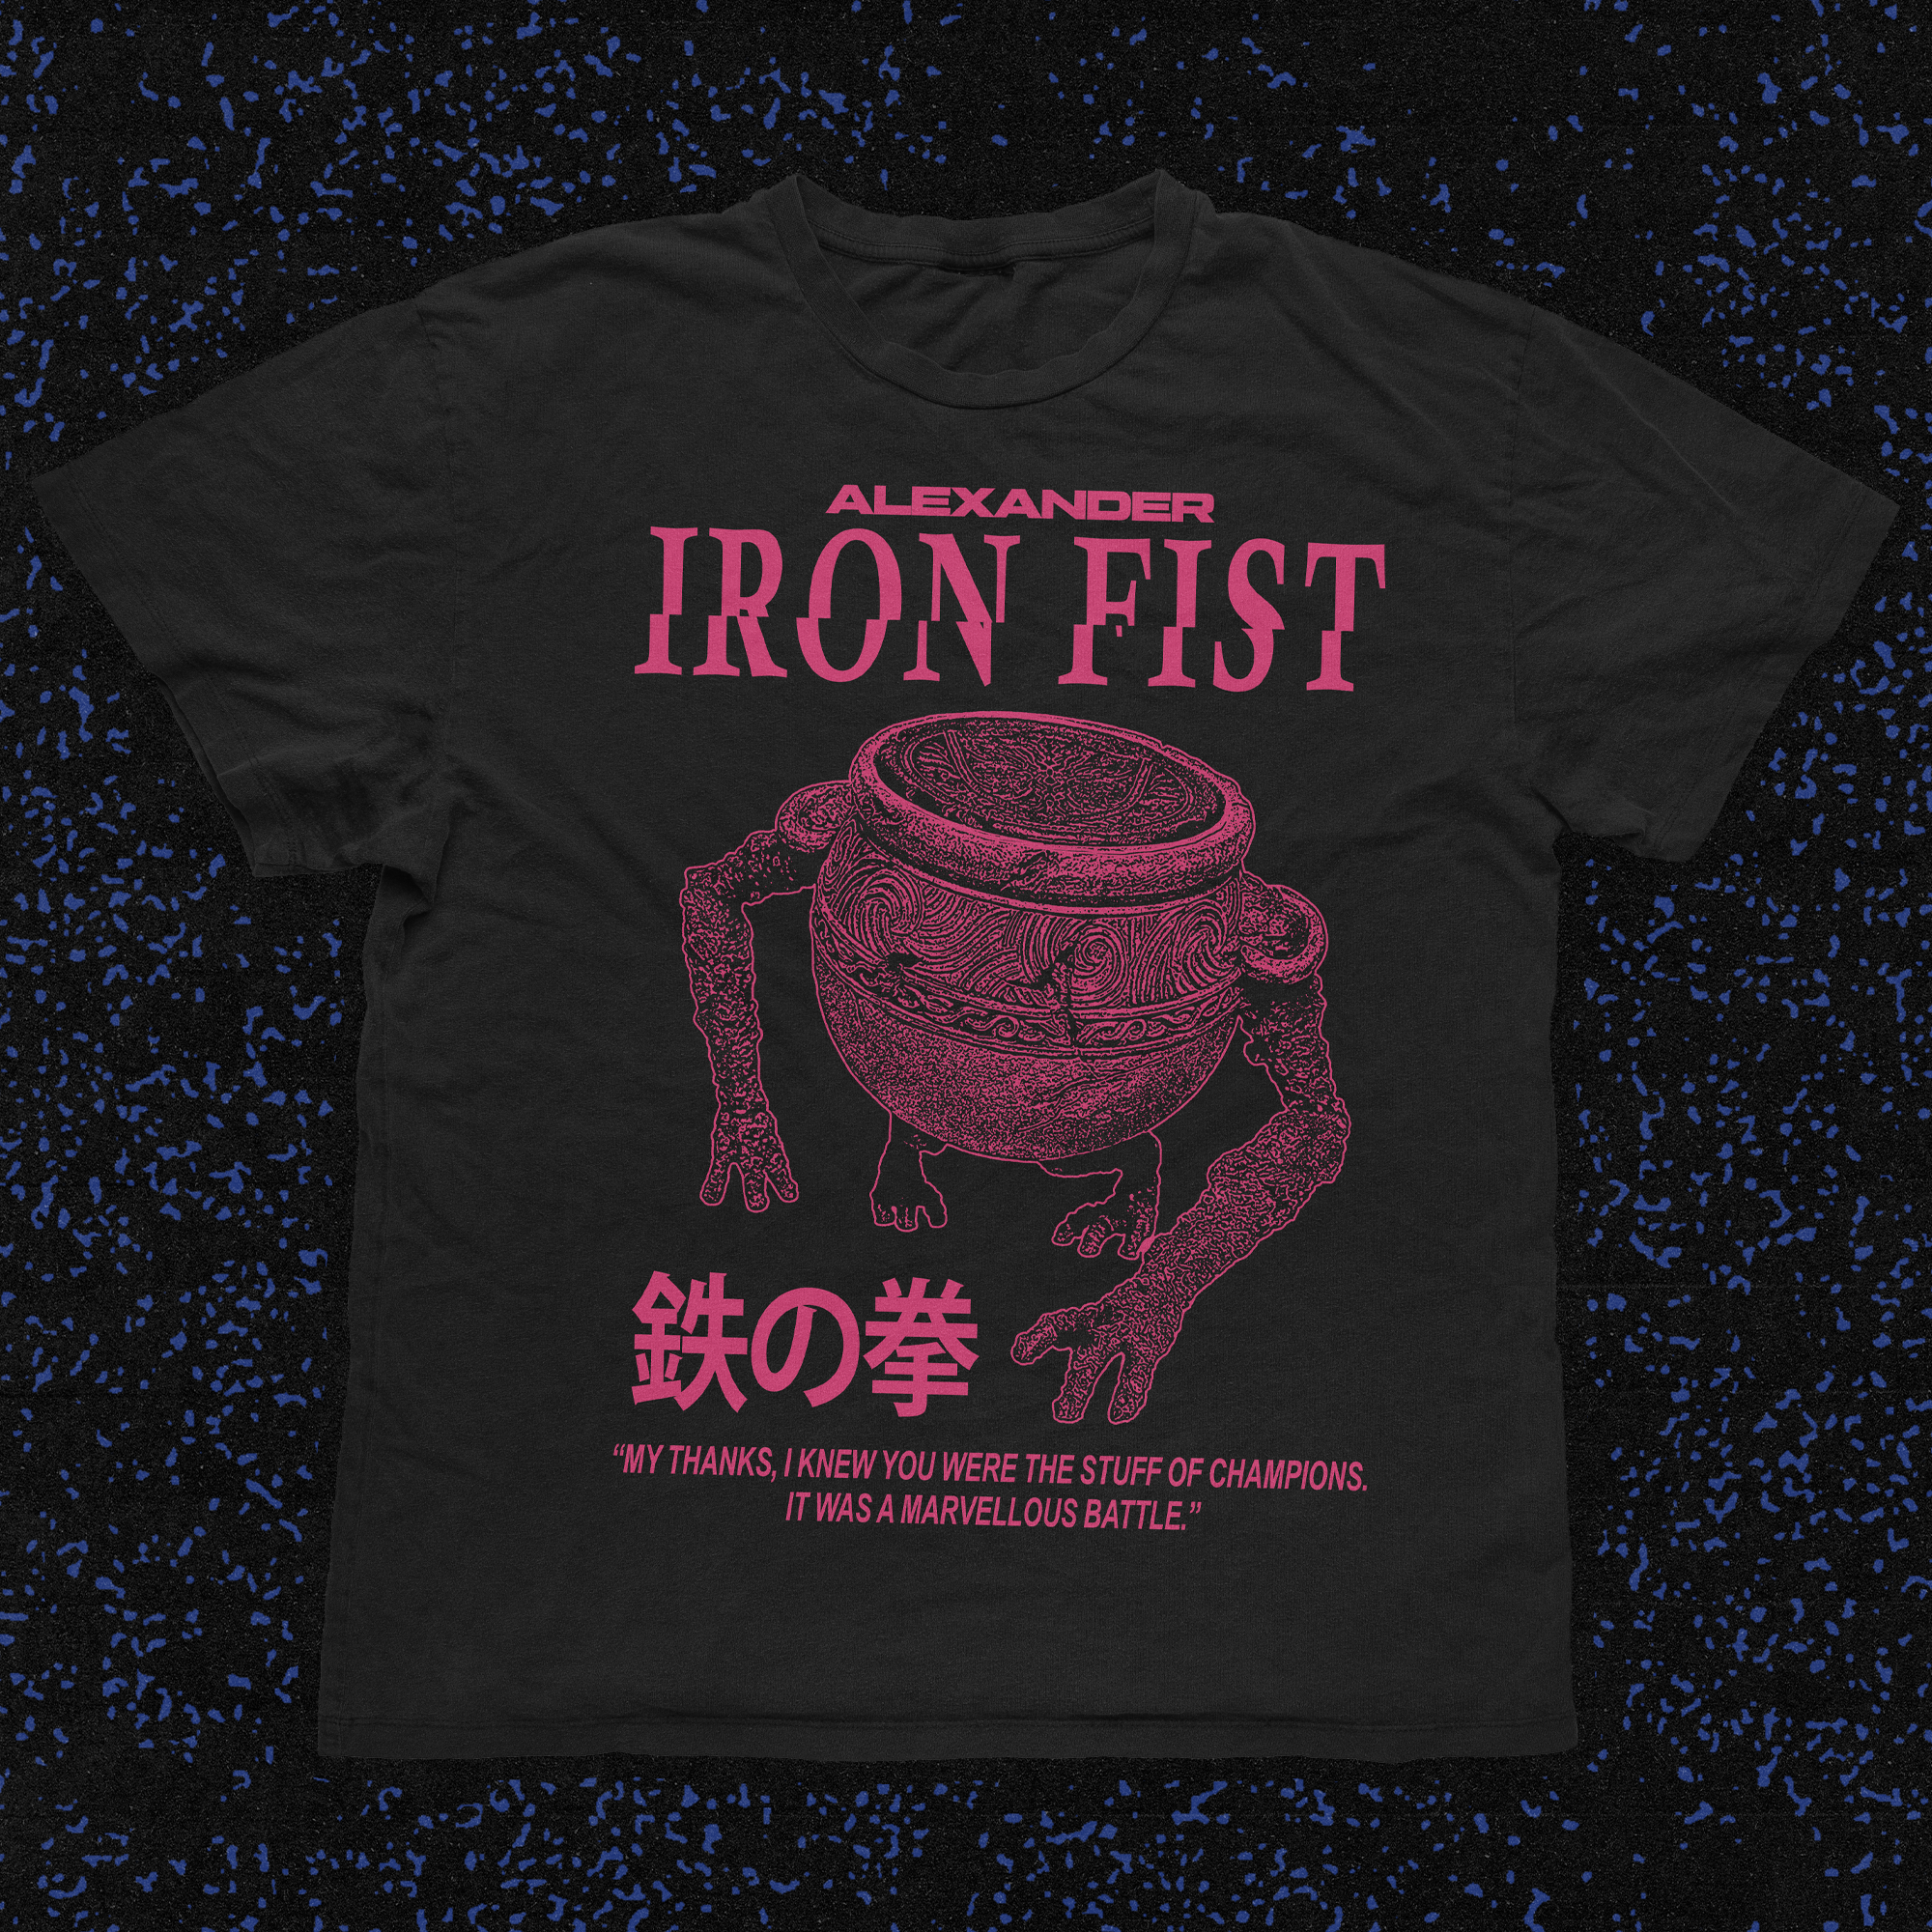 Camiseta Off White - Iron Fist Alexander - Elden Ring